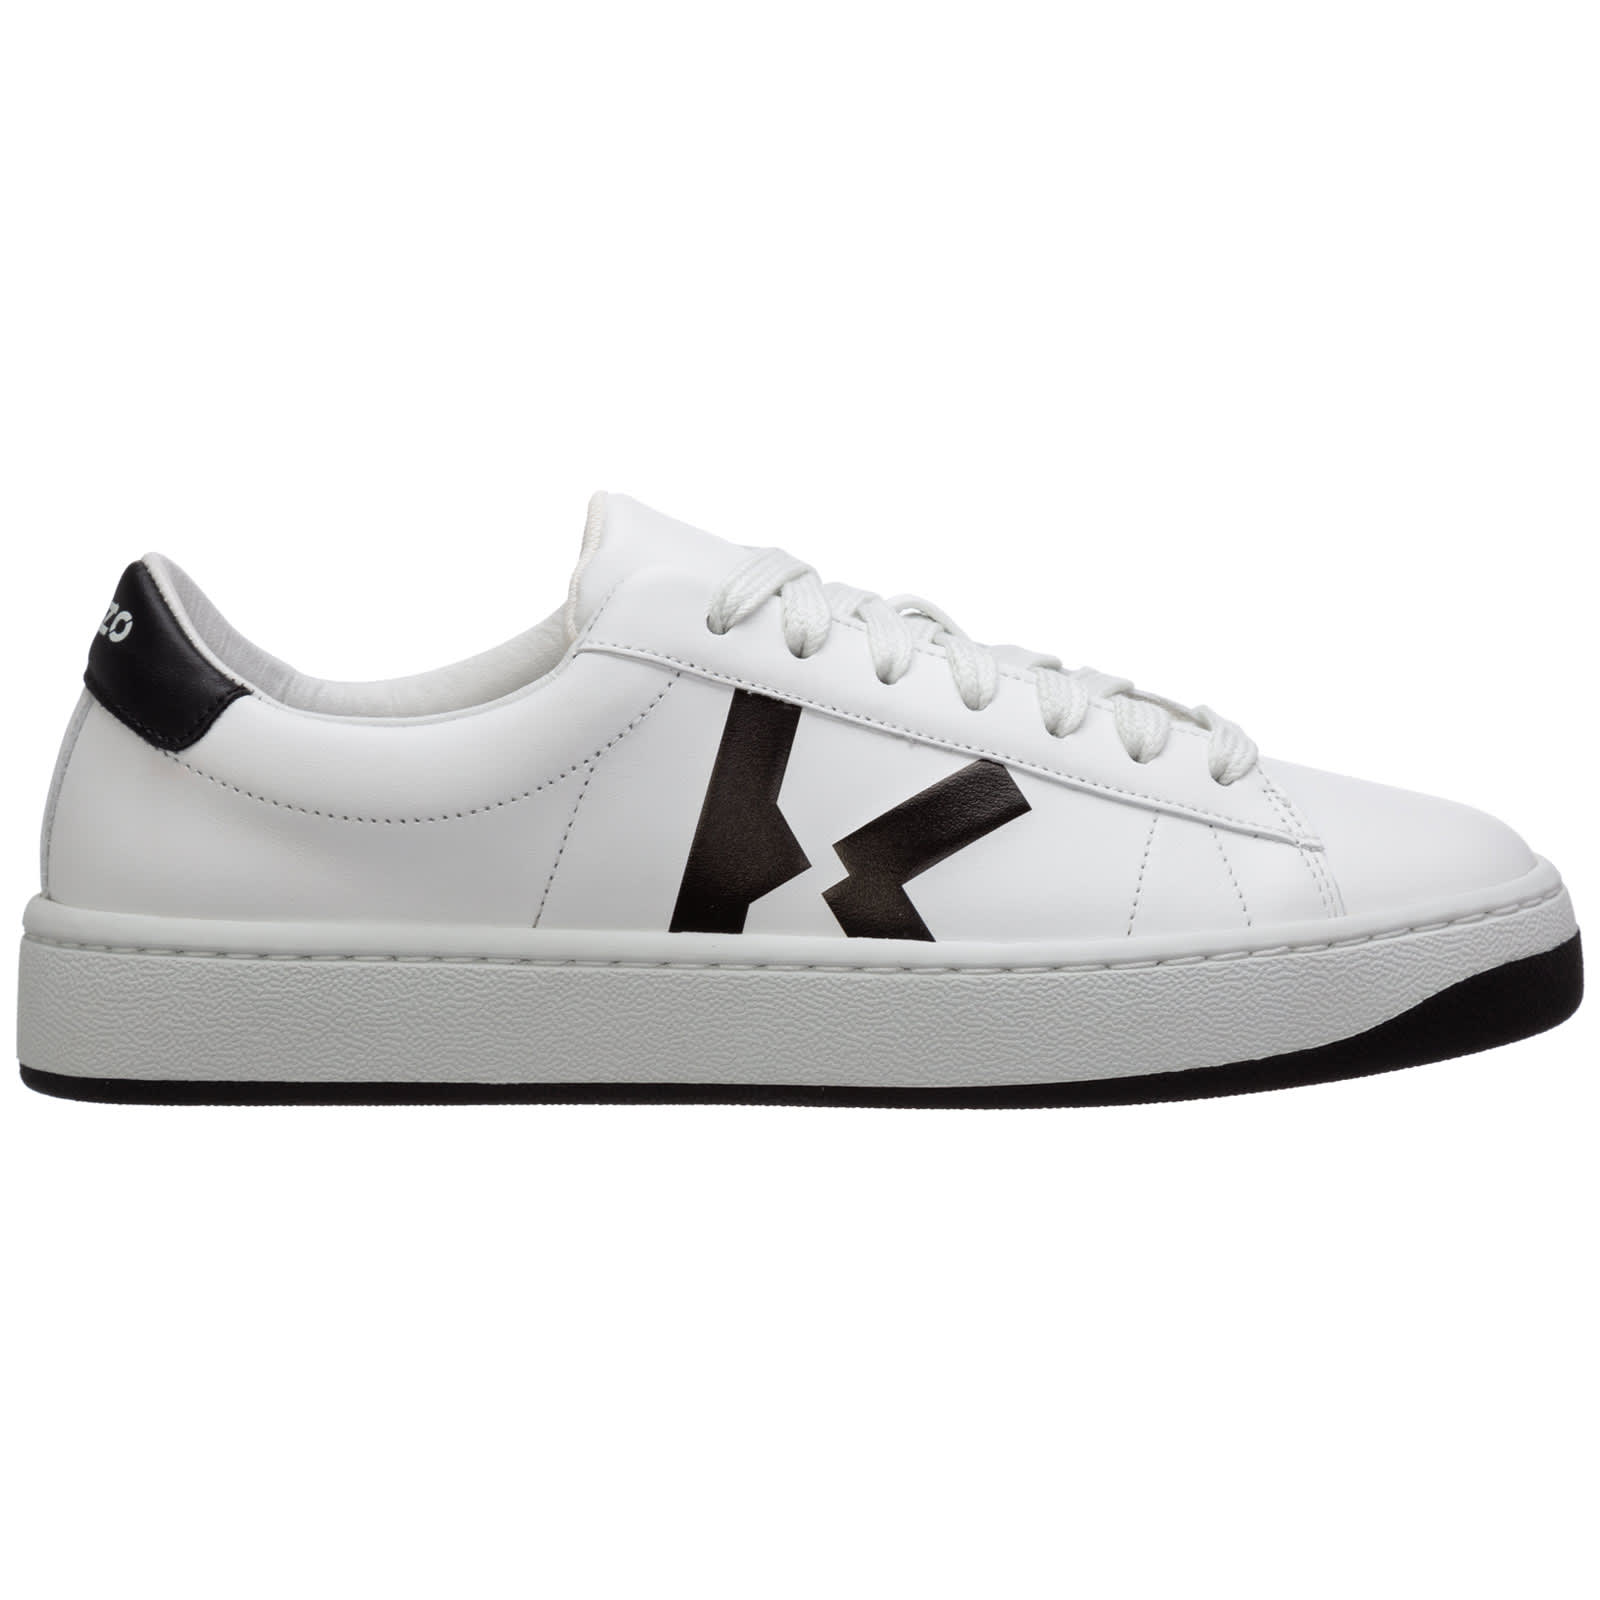 Buy Kenzo Kourt Sneakers online, shop Kenzo shoes with free shipping